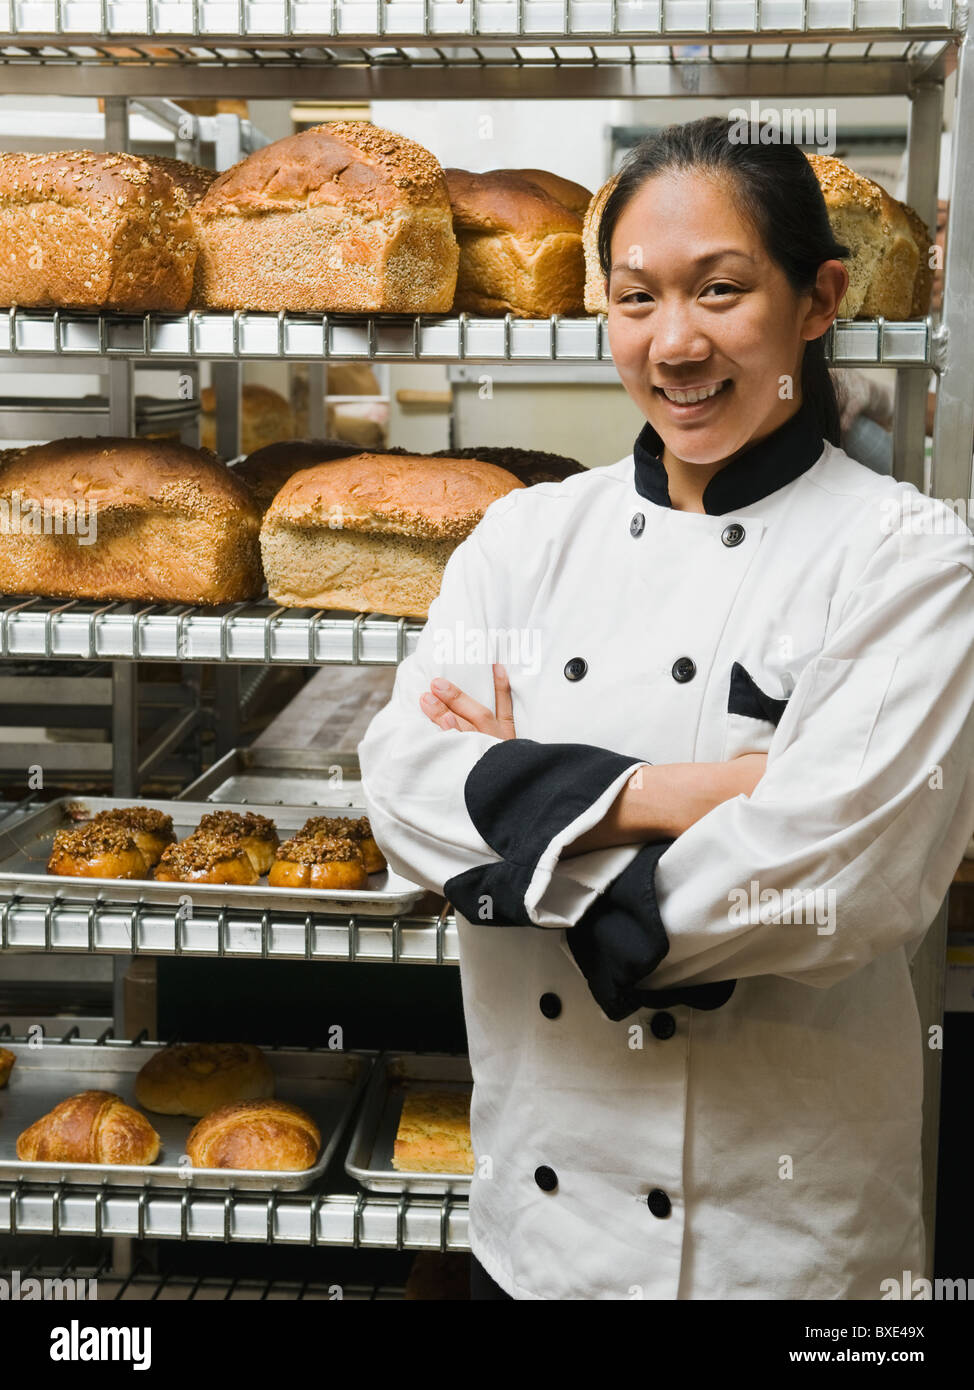 Chef standing beside trays of freshly baked goods Stock Photo